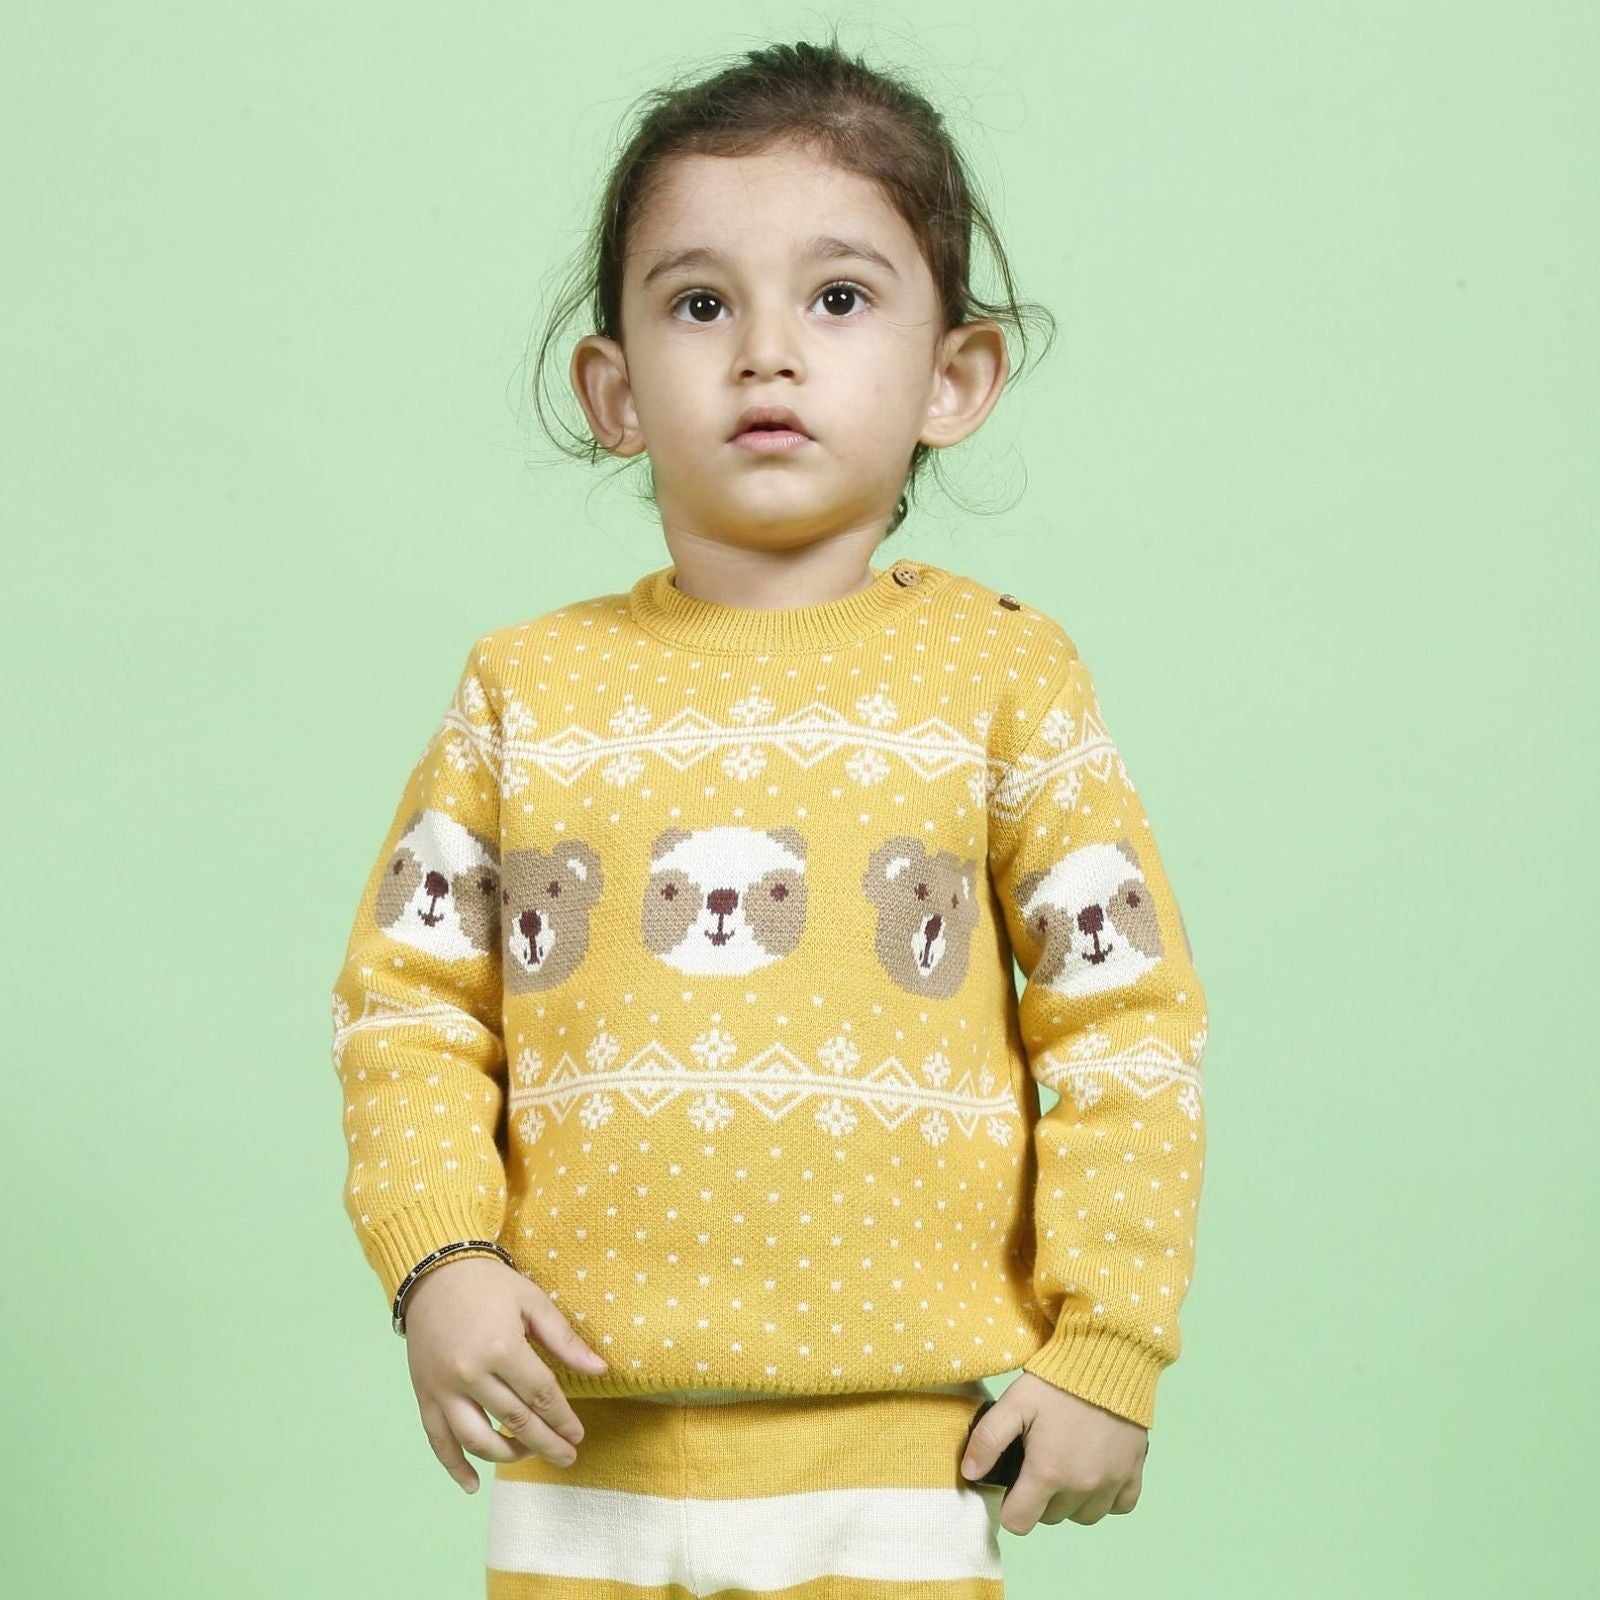 Greendeer Enchanting Bear Jacquard 100% Cotton Sweater with Lower - Mimosa Yellow - Set of 2